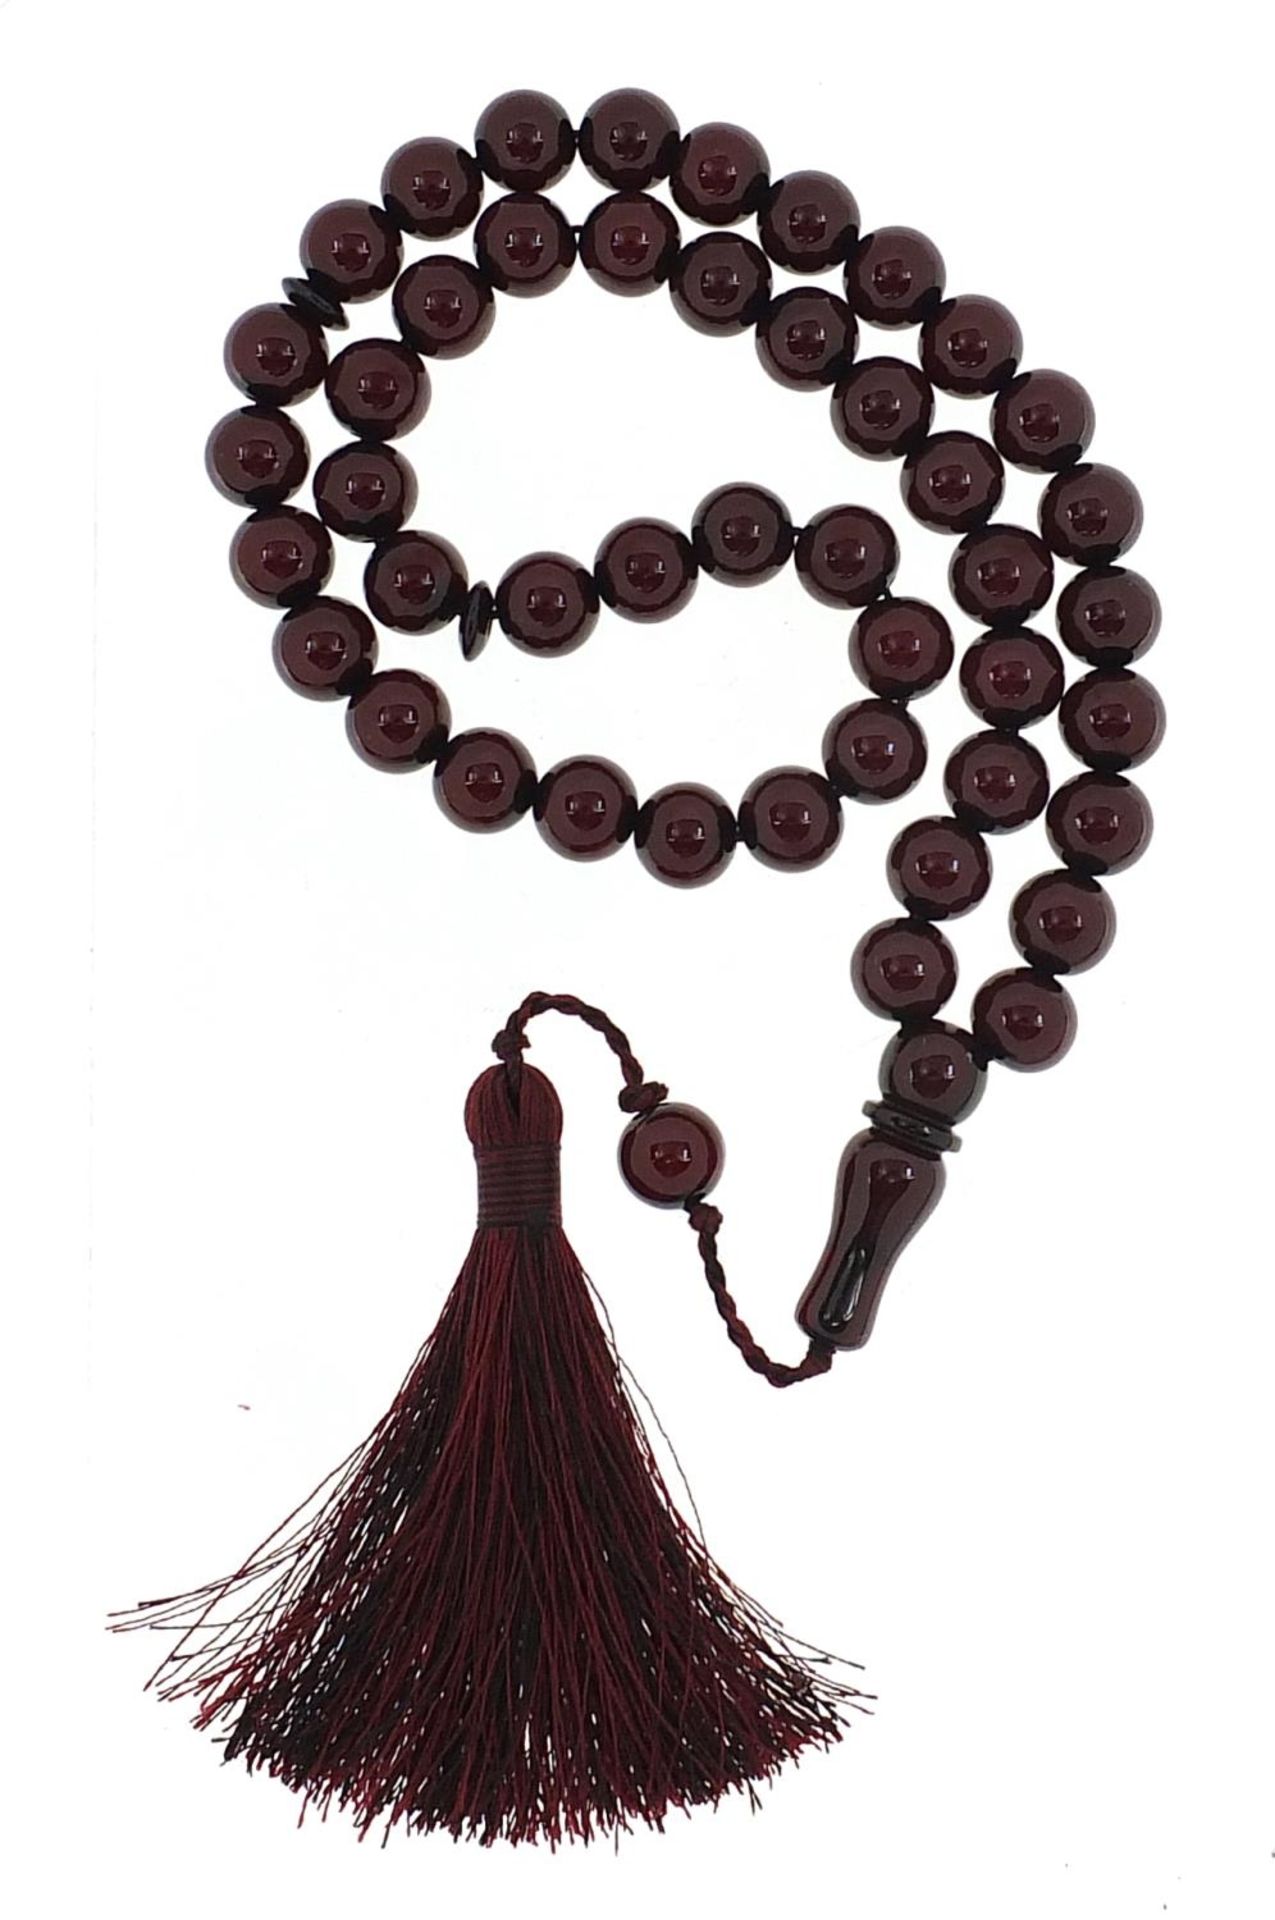 Cherry amber coloured Tesbih prayer beads, 47cm in length - Image 2 of 2